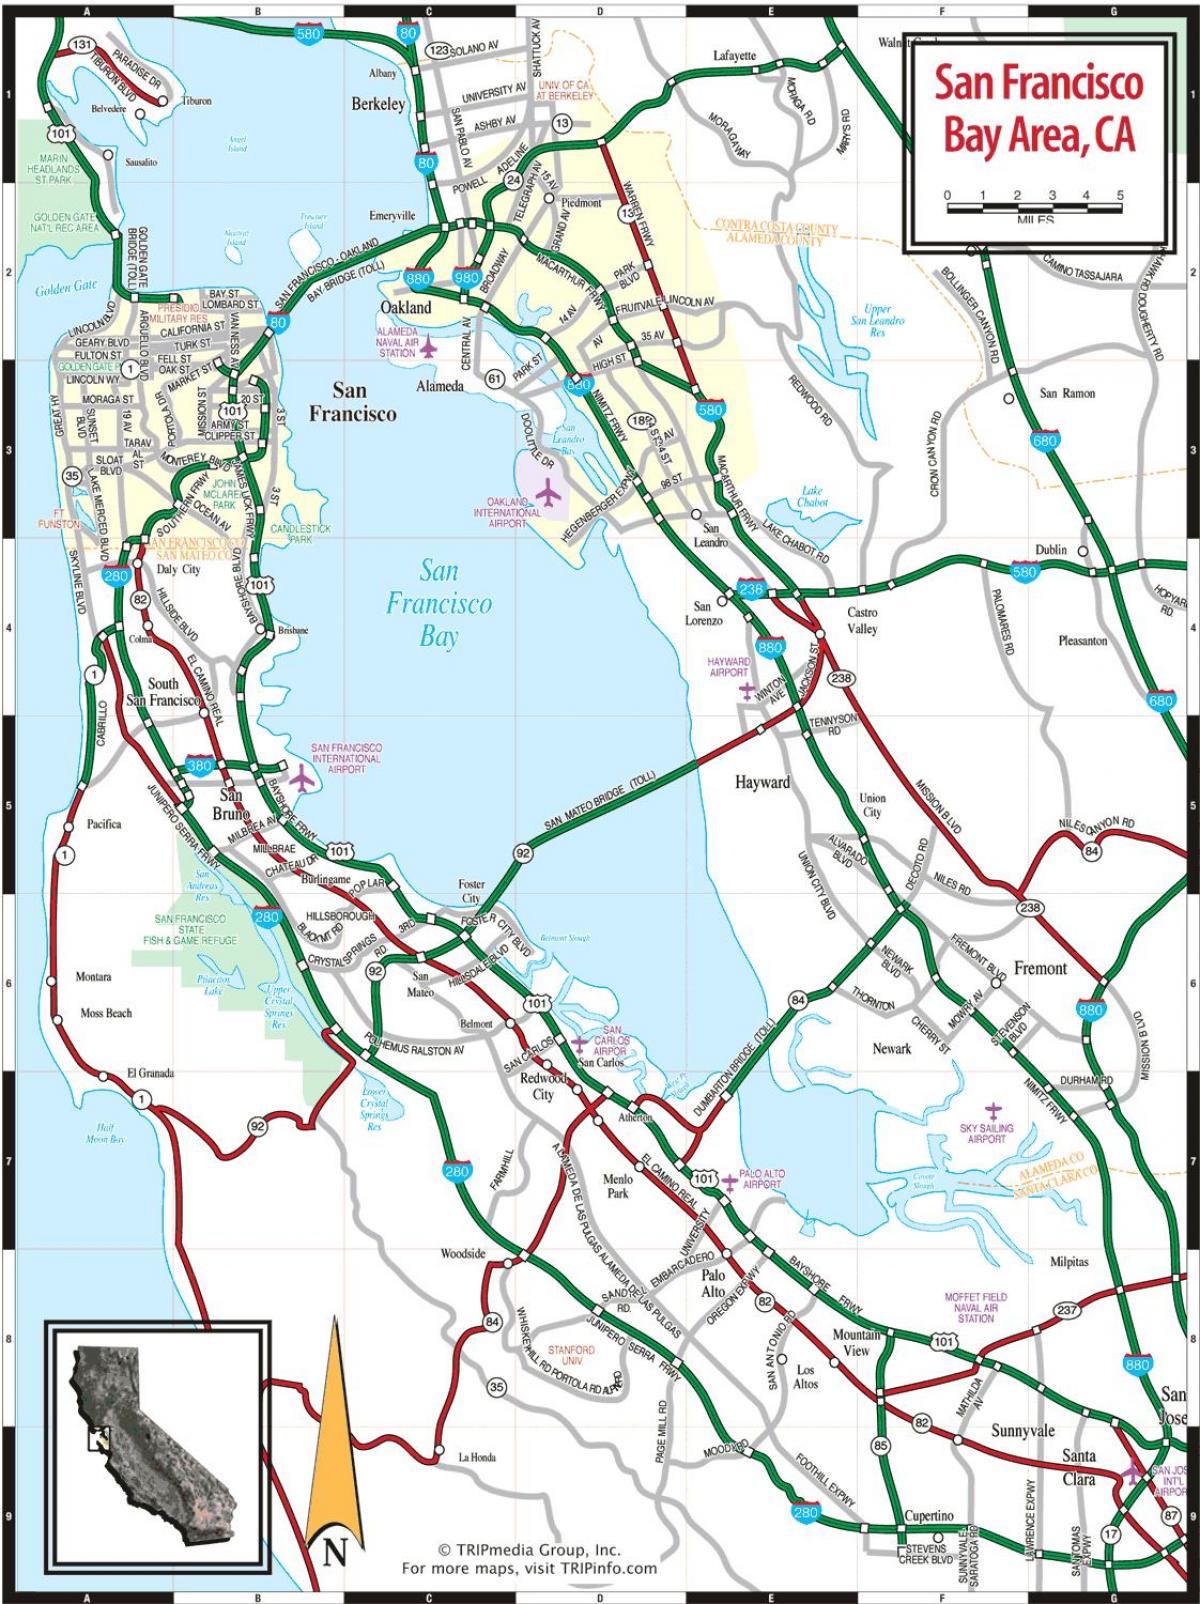 harta e San Francisco bay area